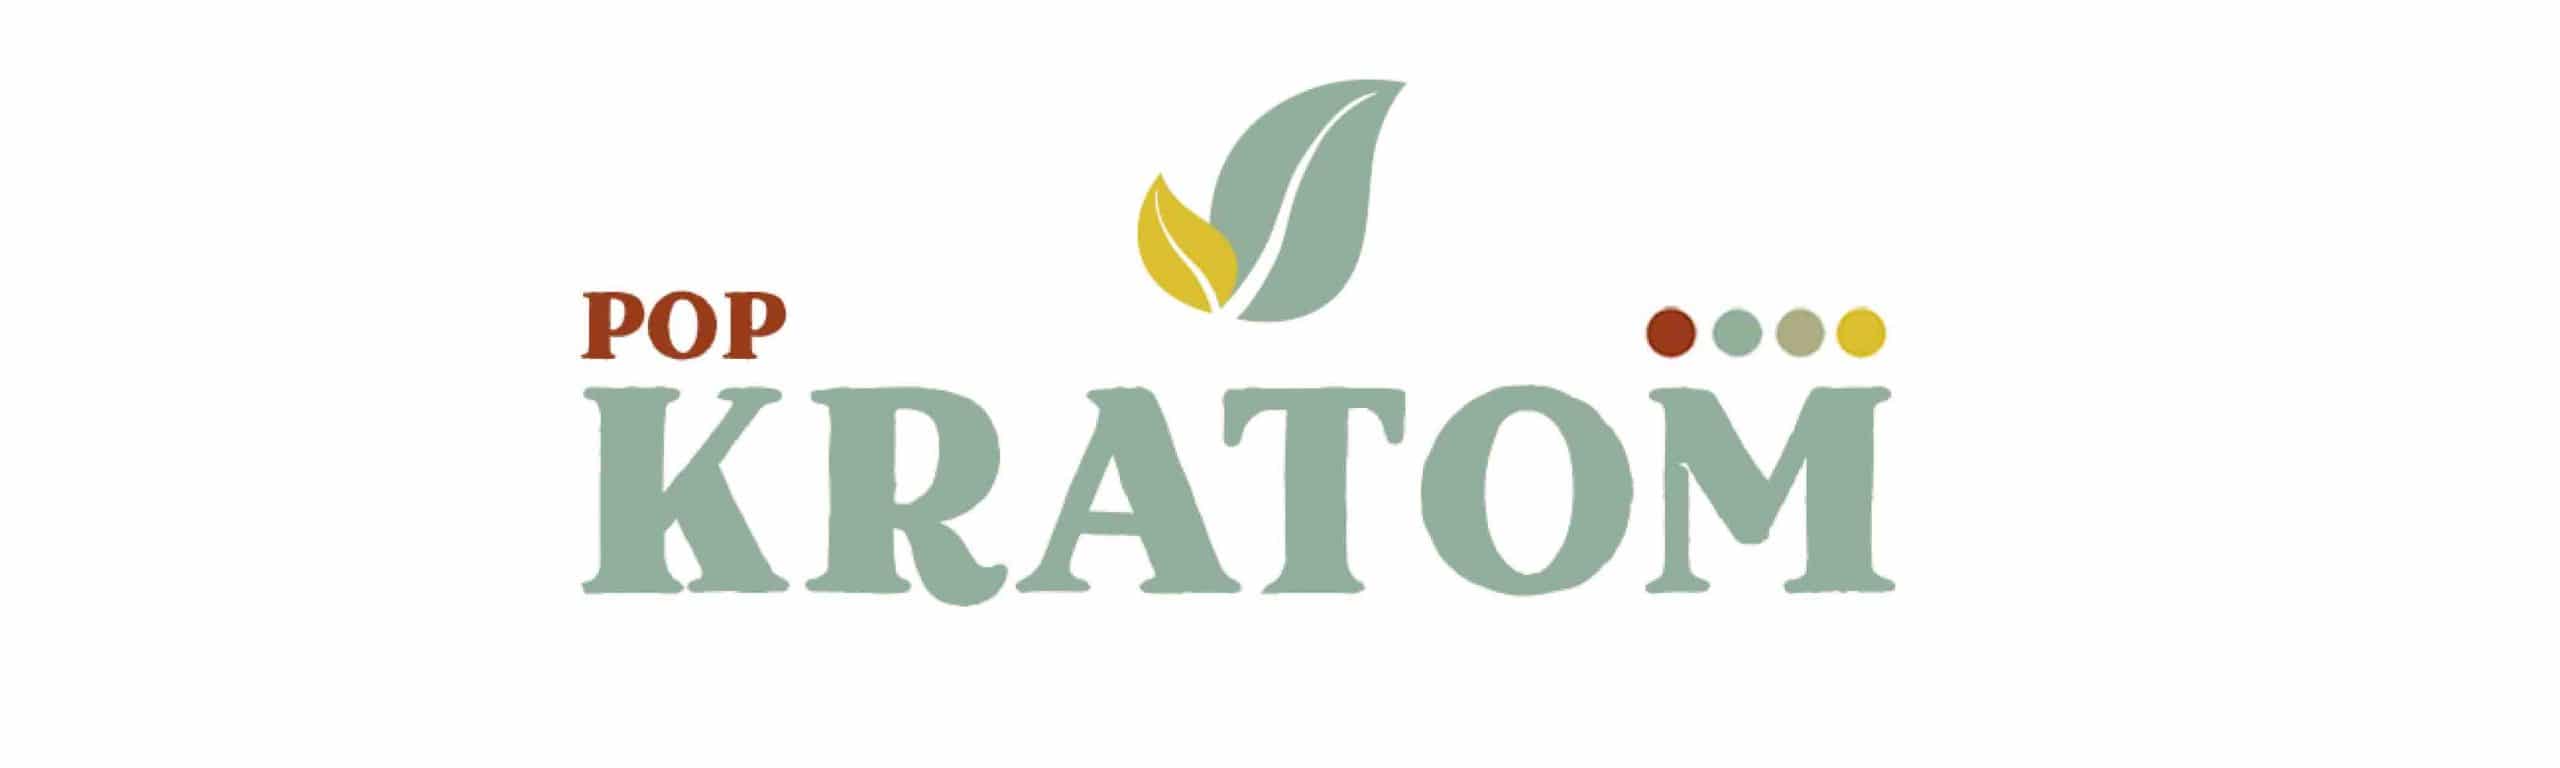 image of pop kratom logo